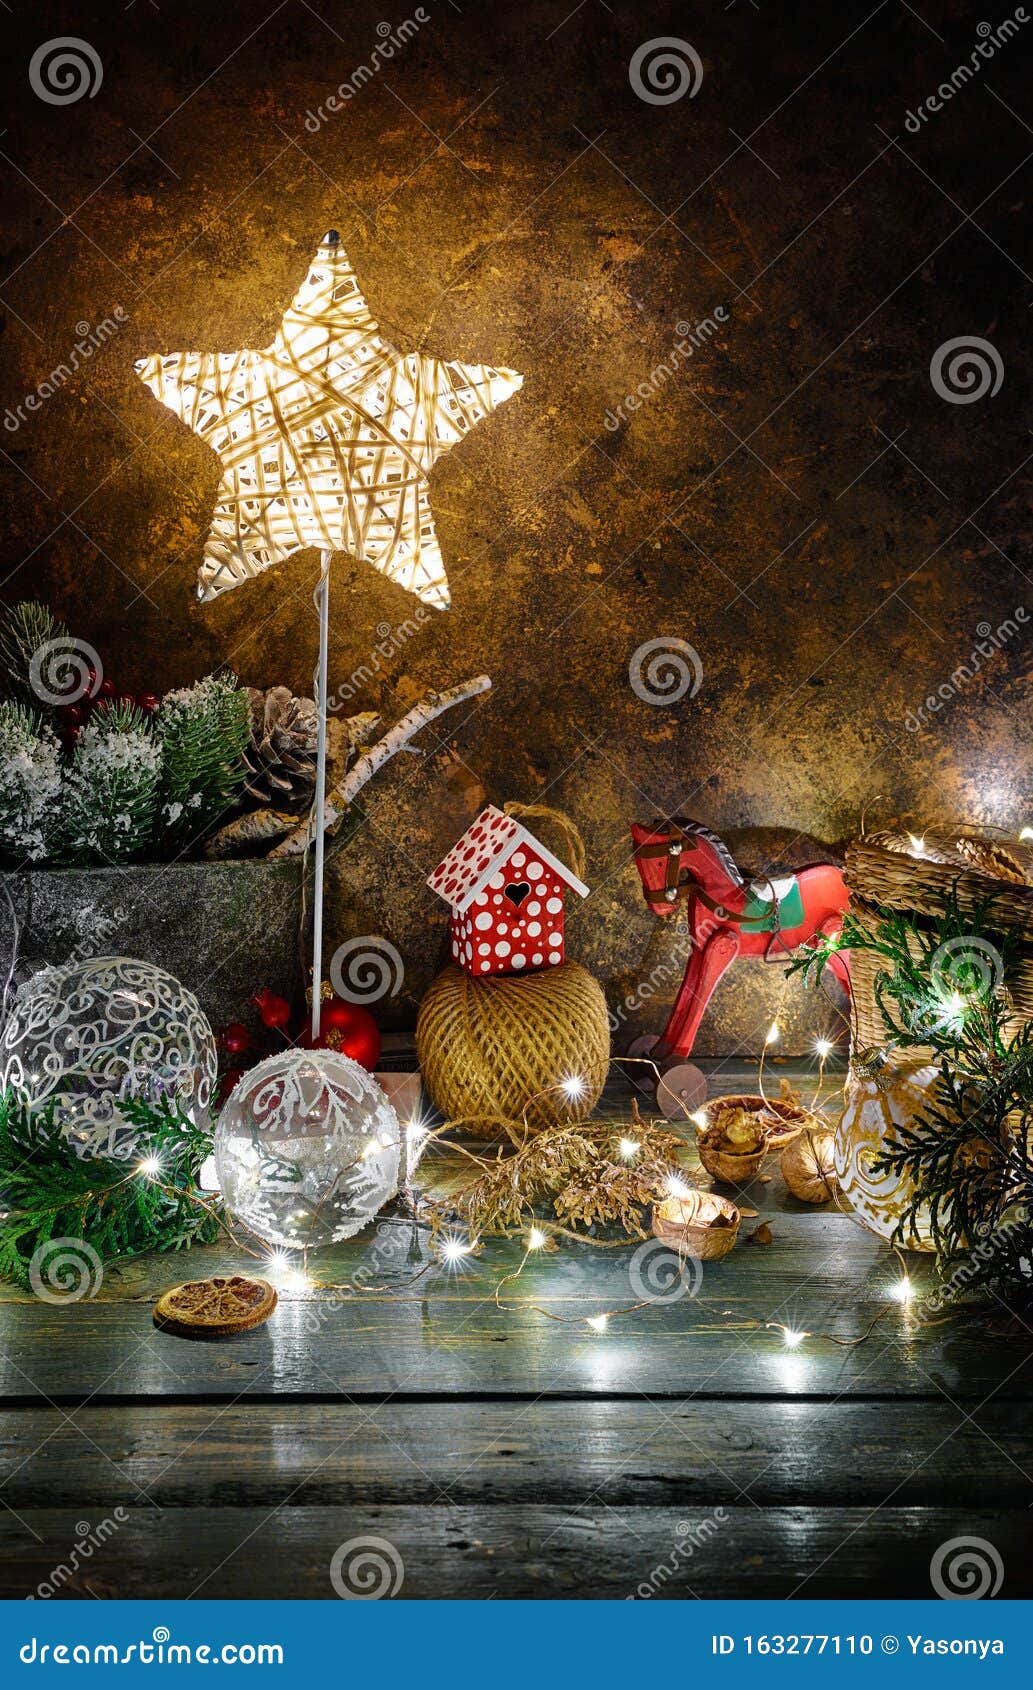 Christmas Holiday Decoration with Shining Star Stock Photo - Image ...